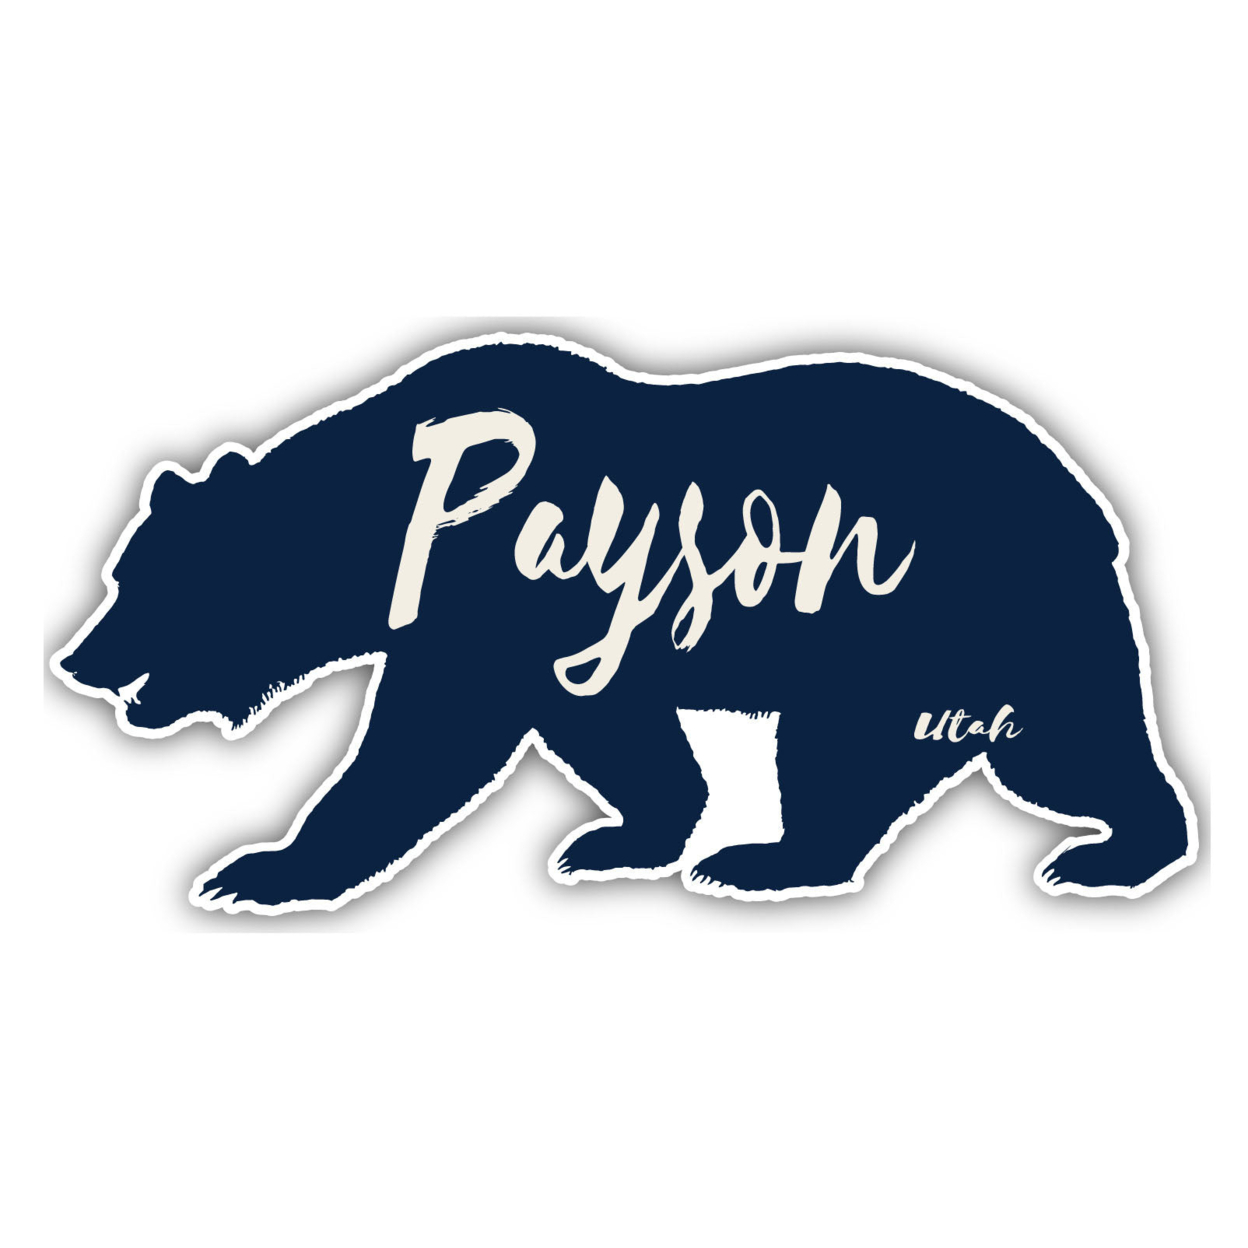 Payson Utah Souvenir Decorative Stickers (Choose Theme And Size) - Single Unit, 4-Inch, Bear